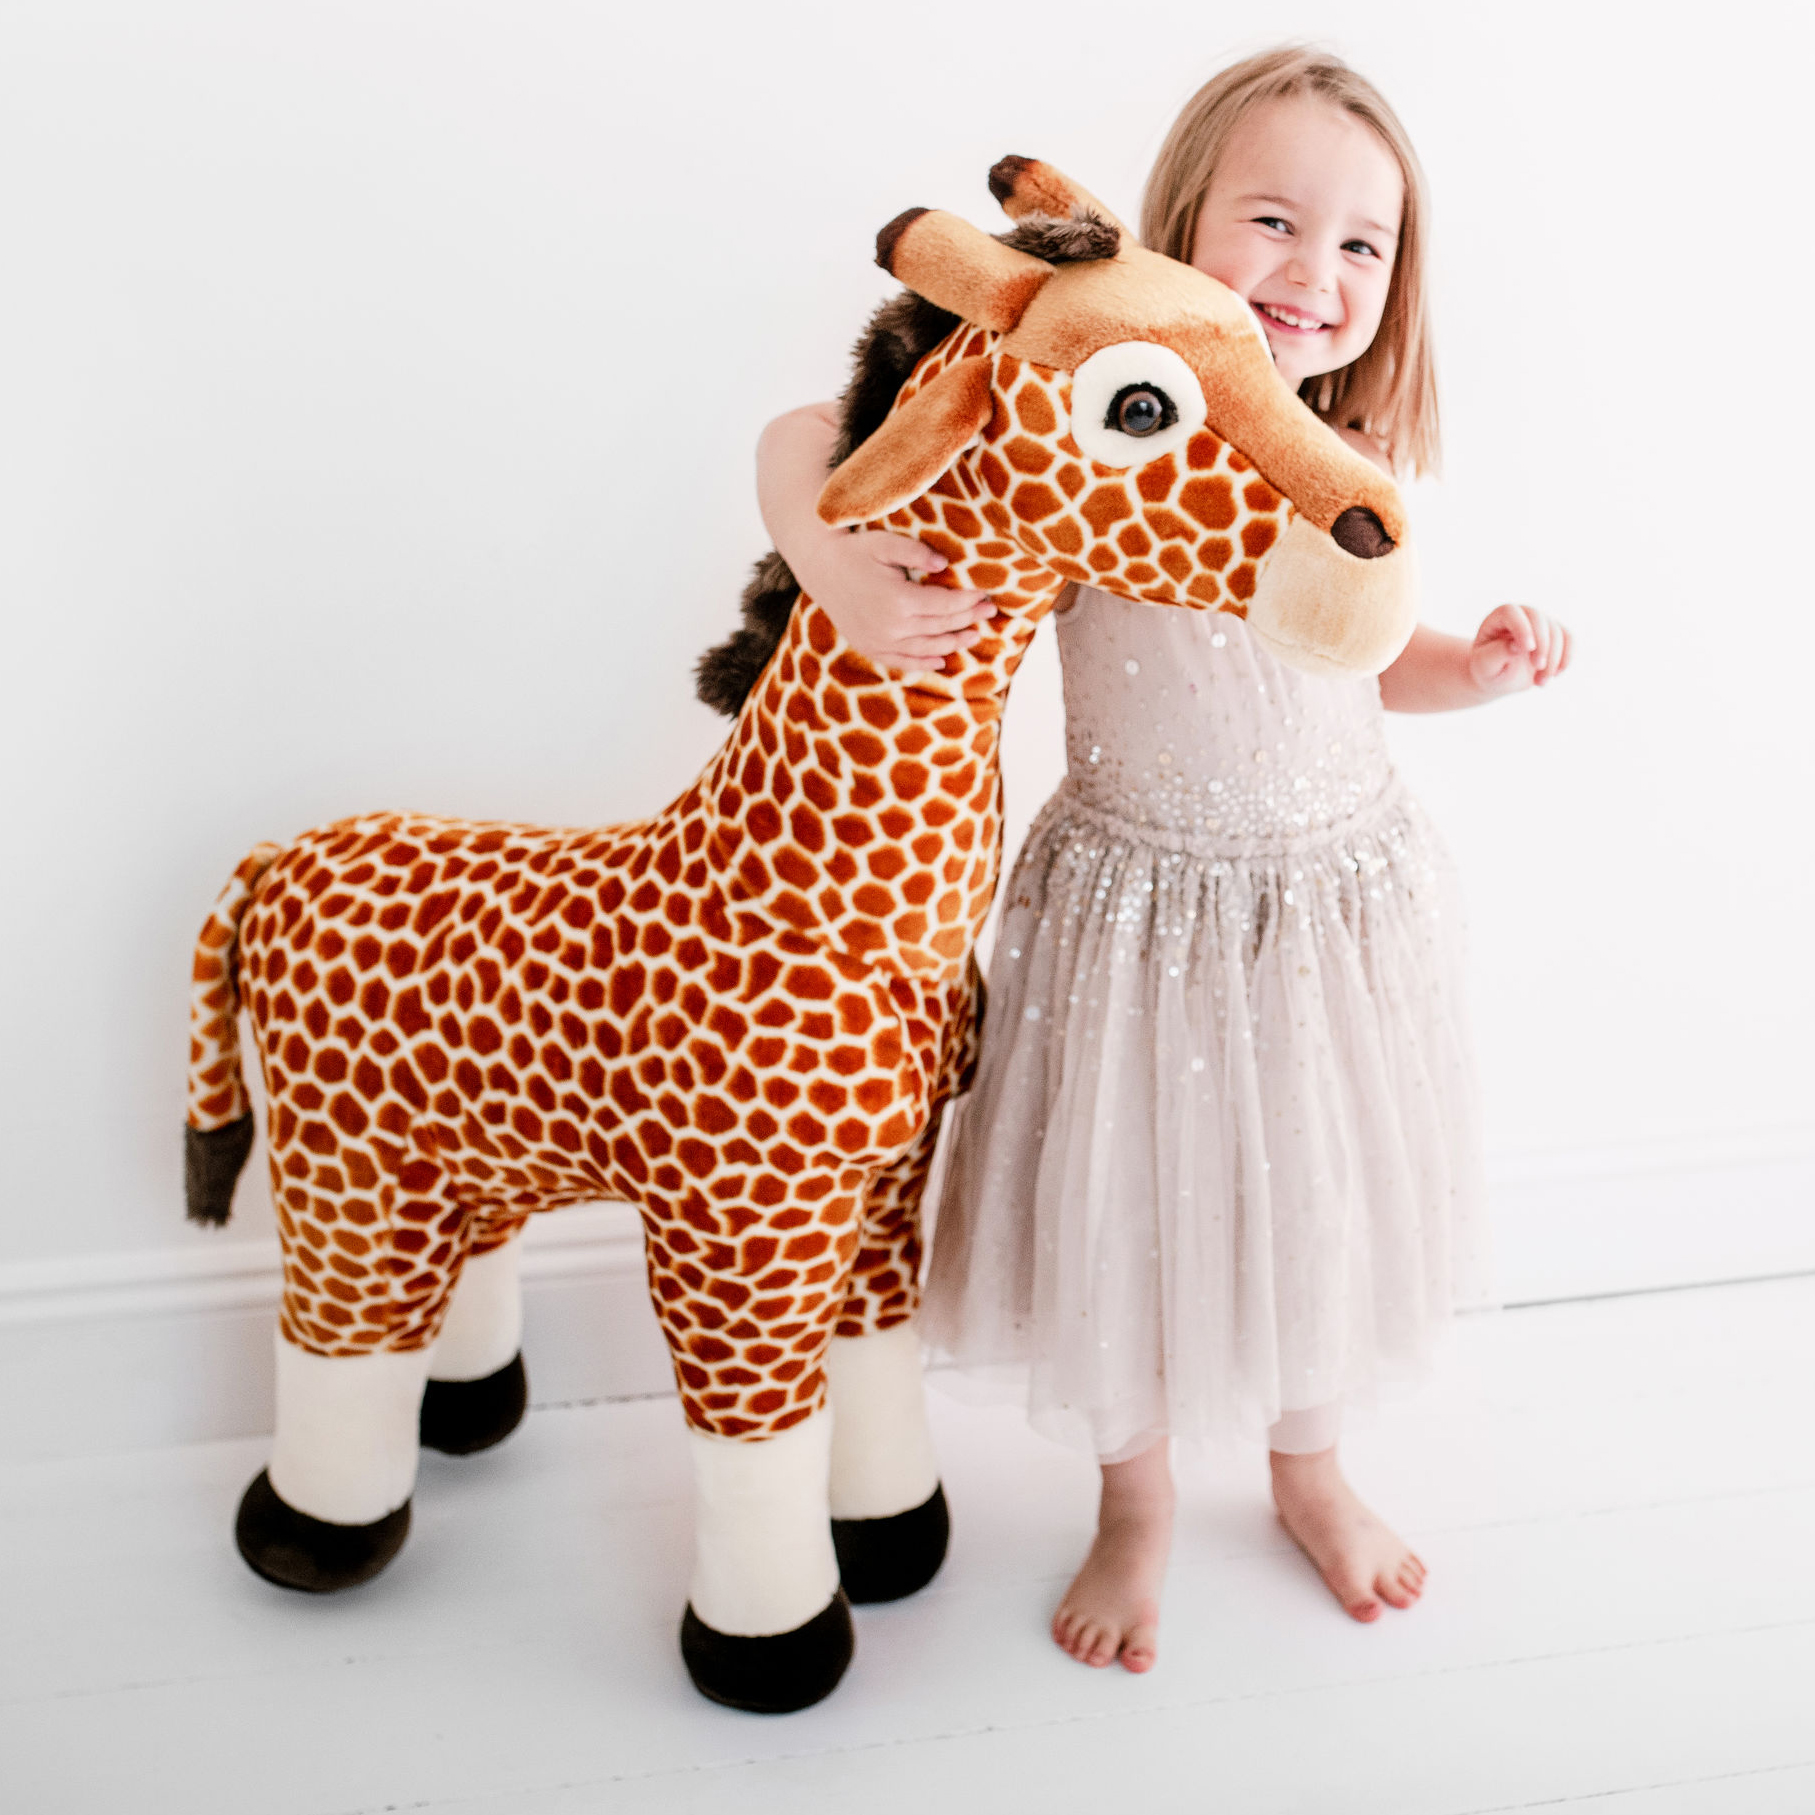 giraffe large toy